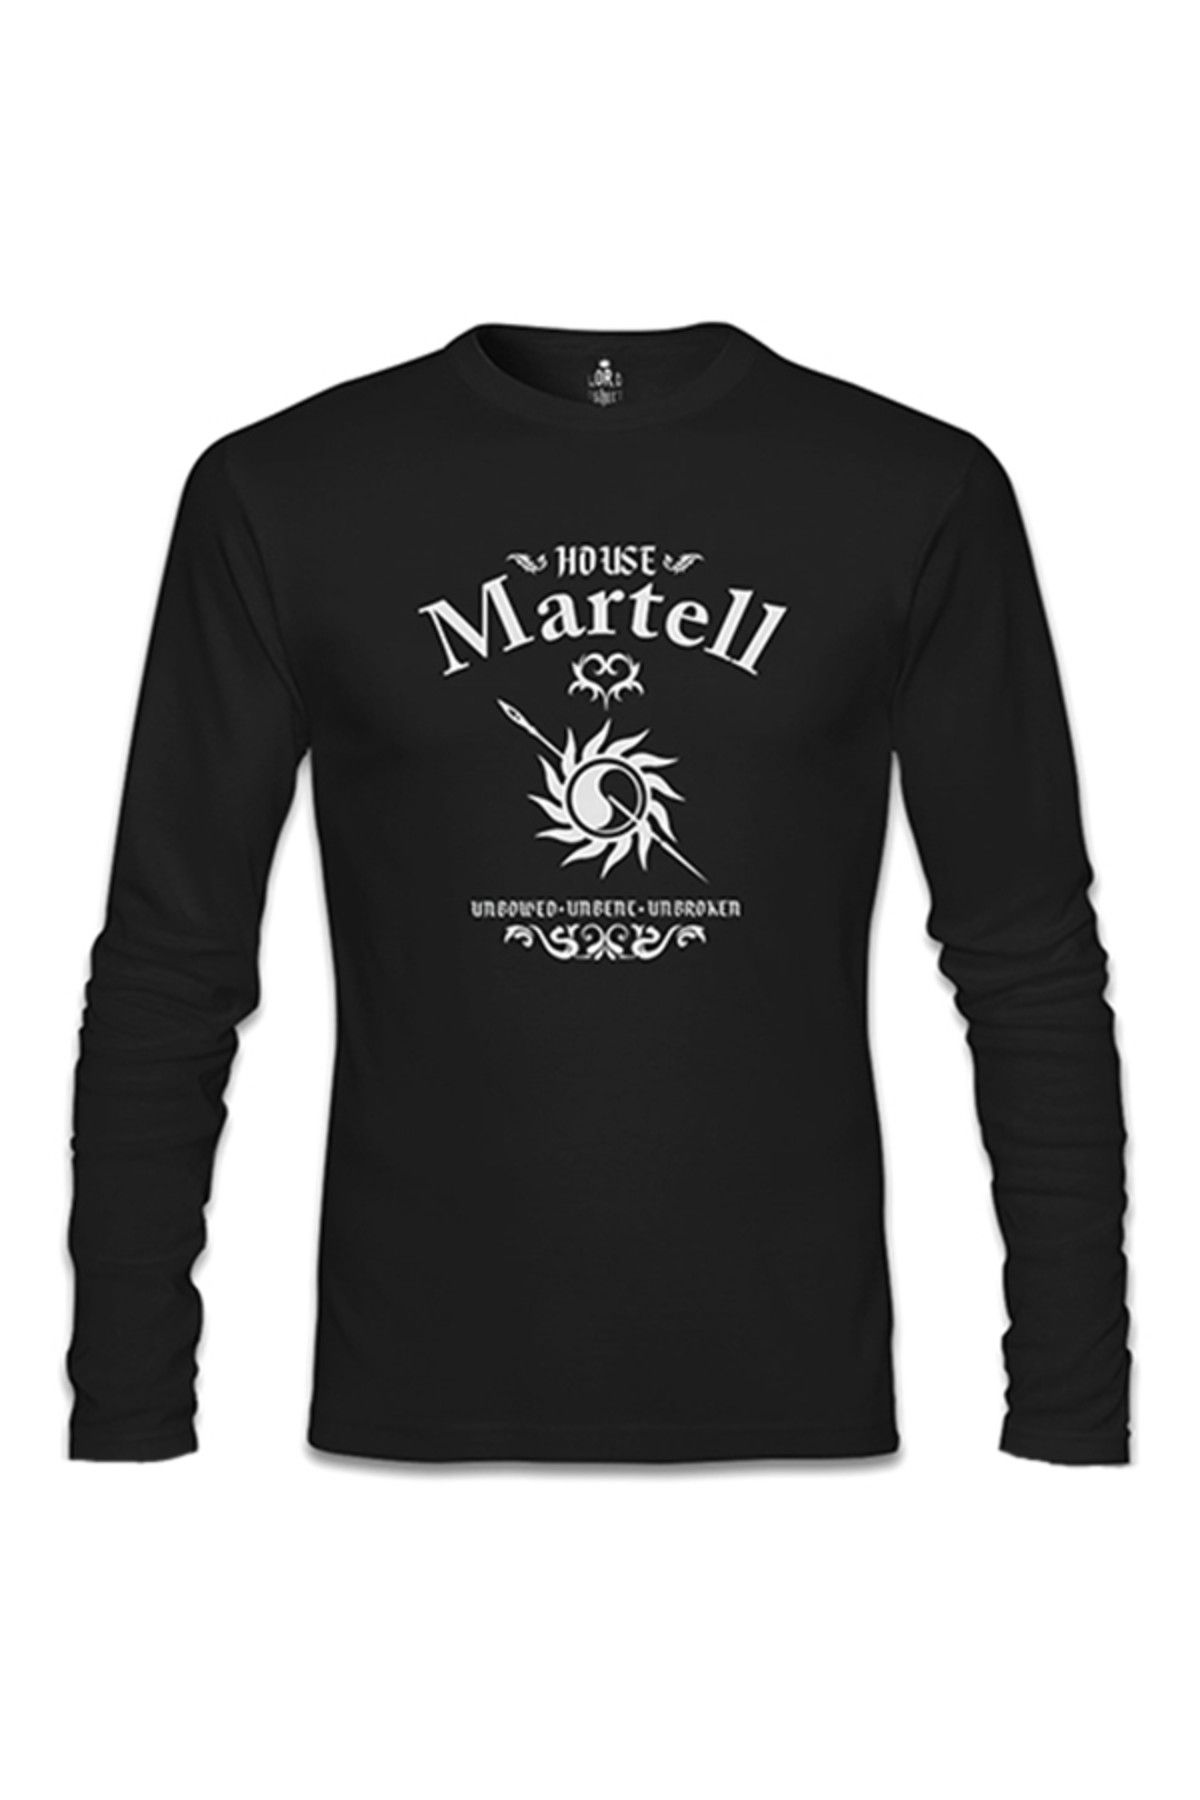 Lord T-Shirt Game of Thrones - House Martell Unbroken Siyah Erkek Sweatshirt - sl-800